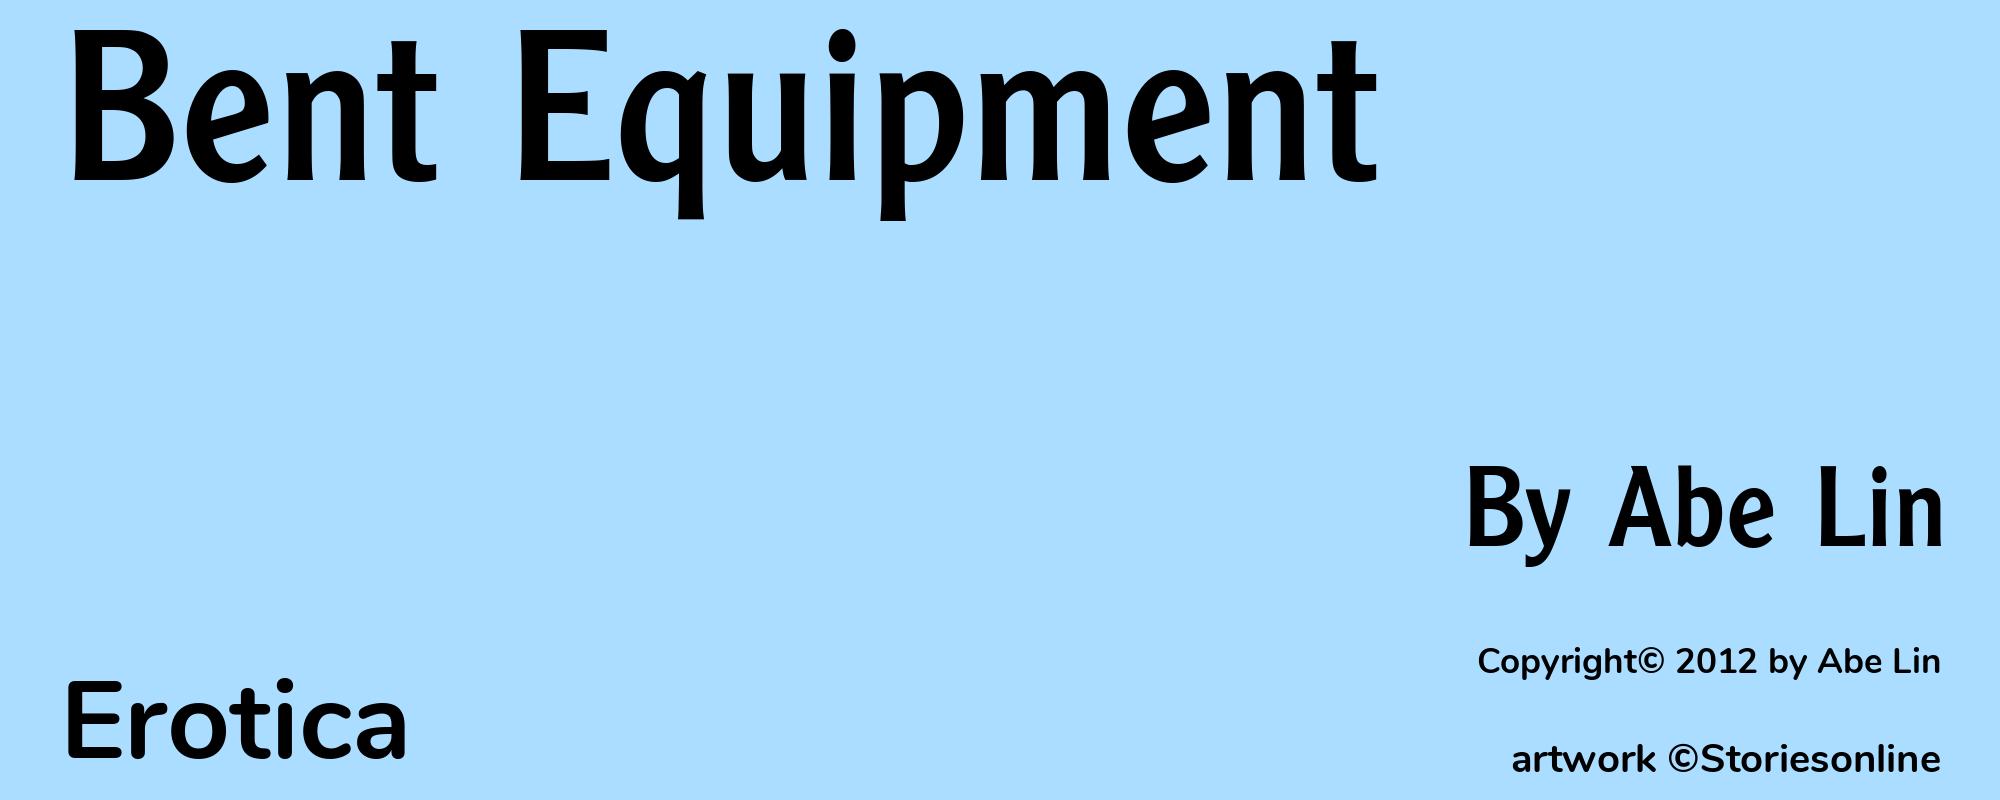 Bent Equipment - Cover